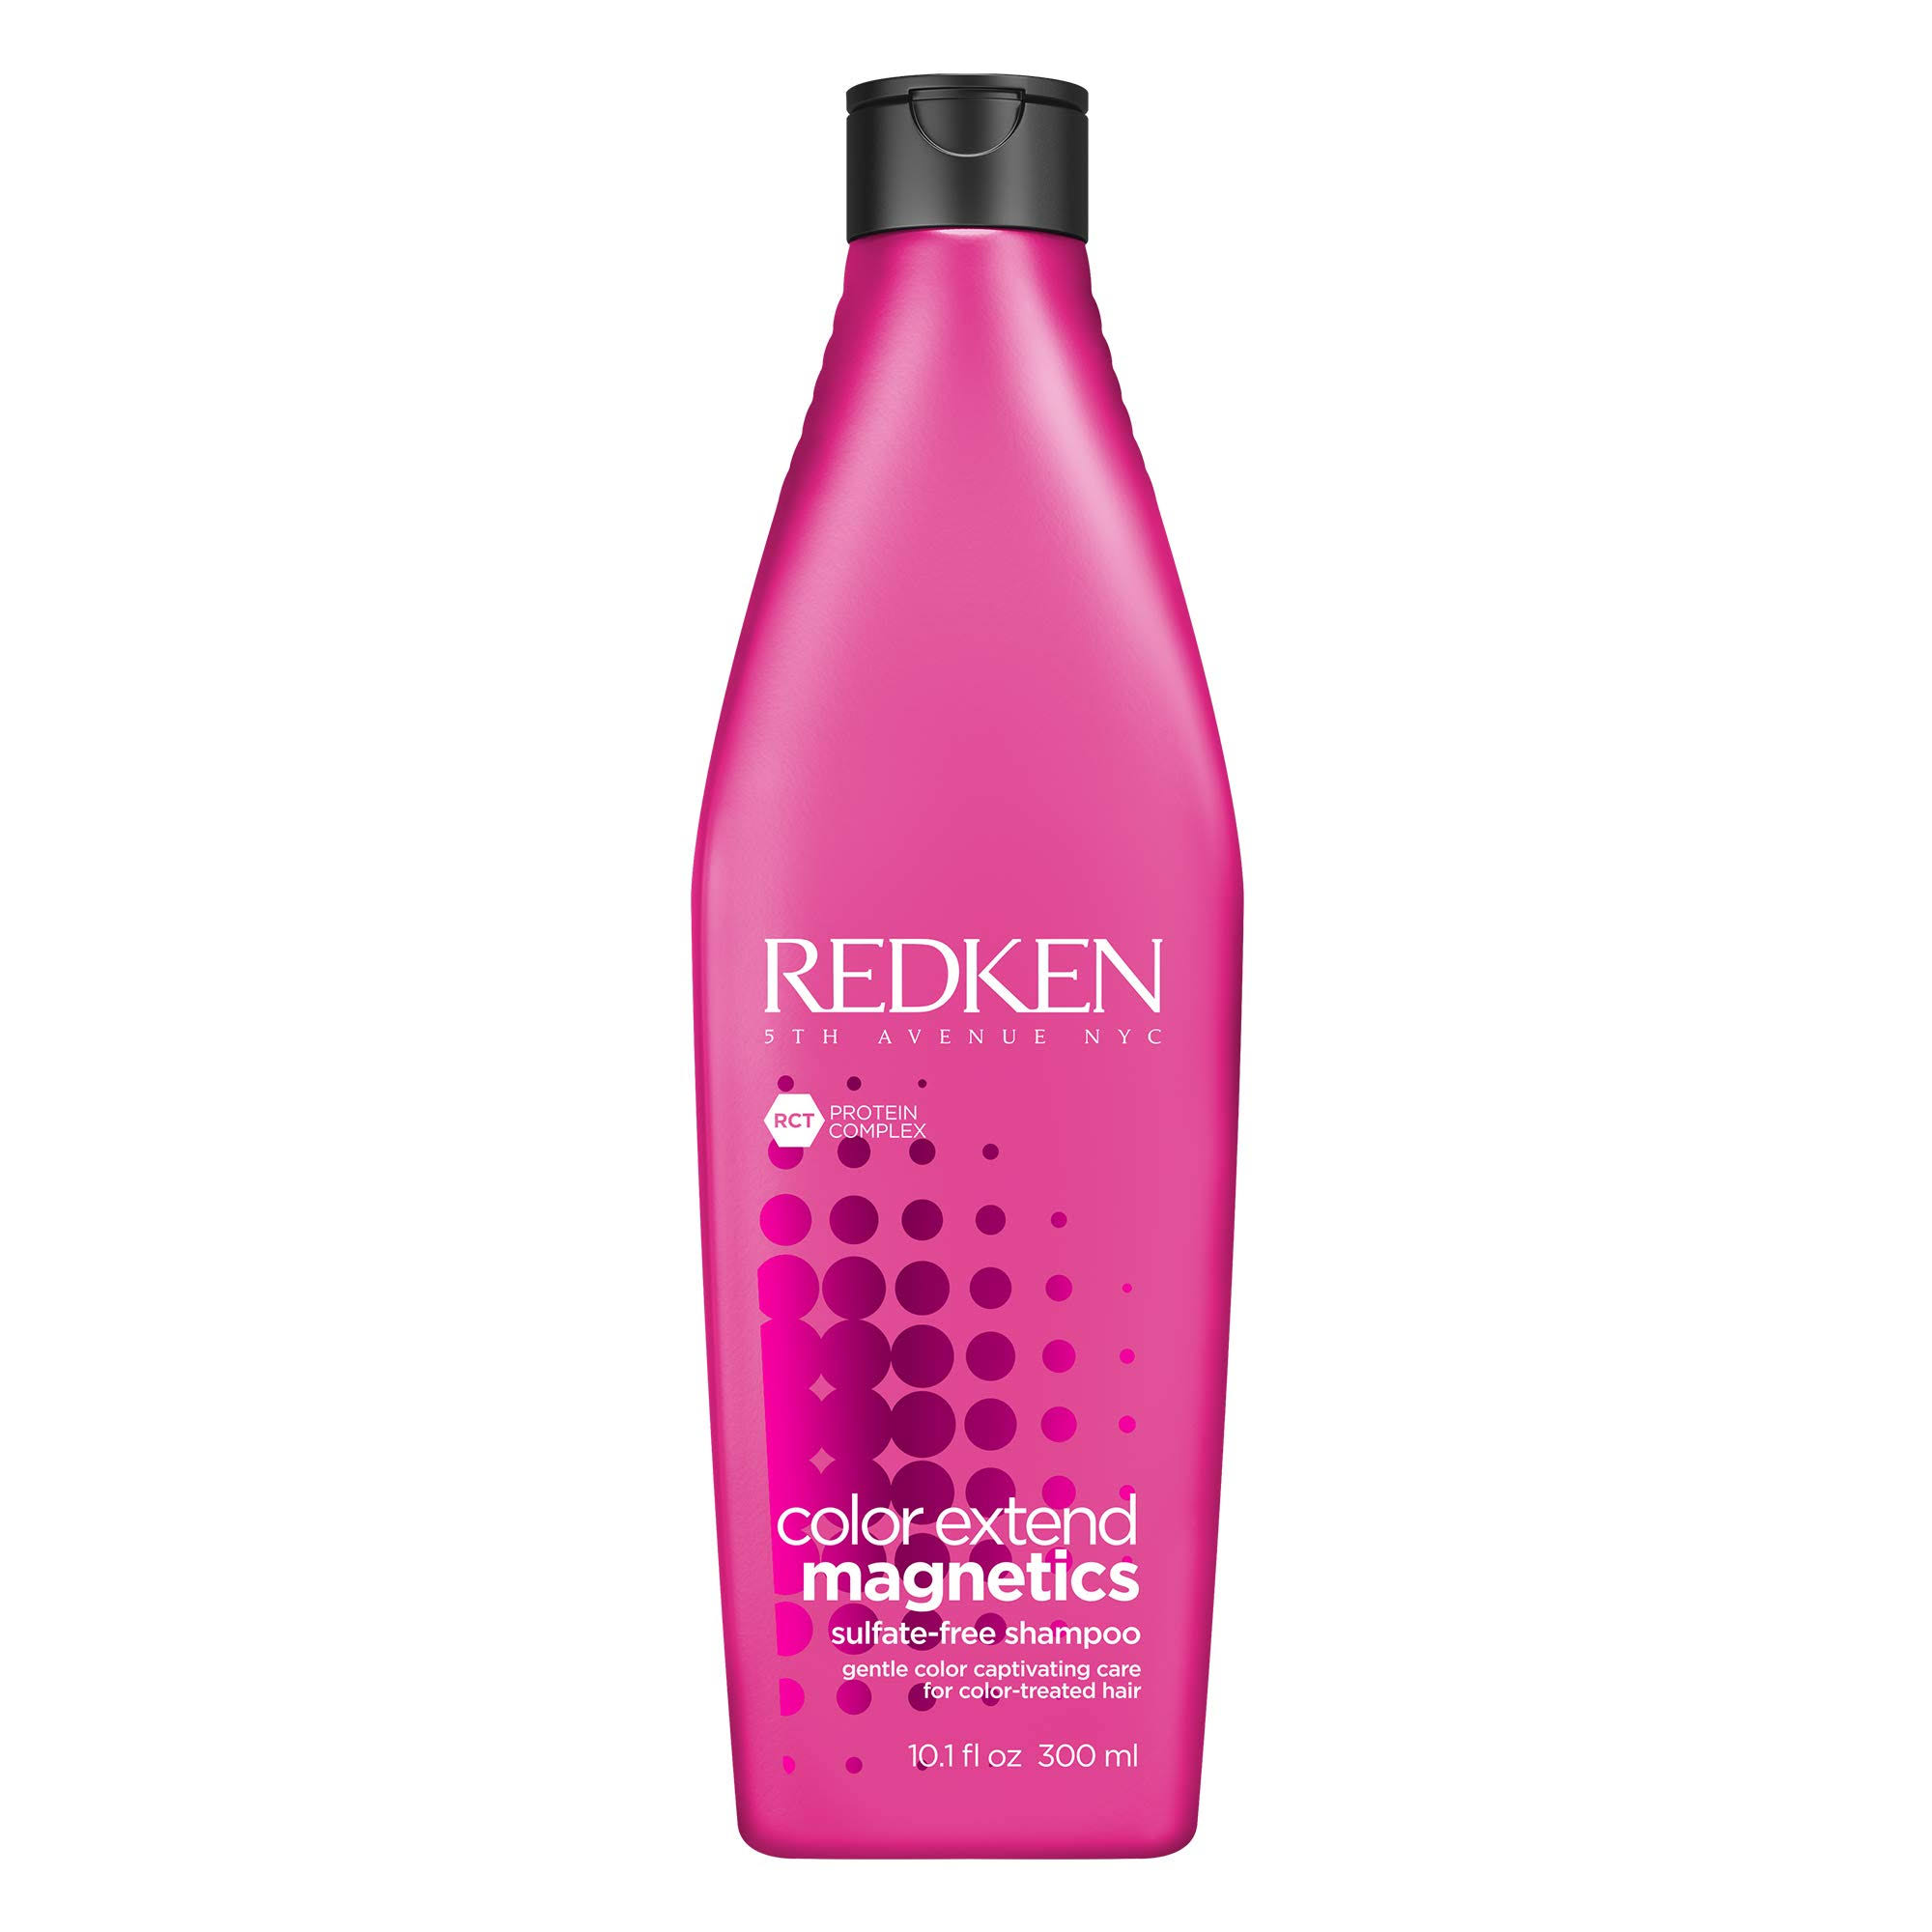 Redken Shampoo - Color Extend Magnetics, 300ml